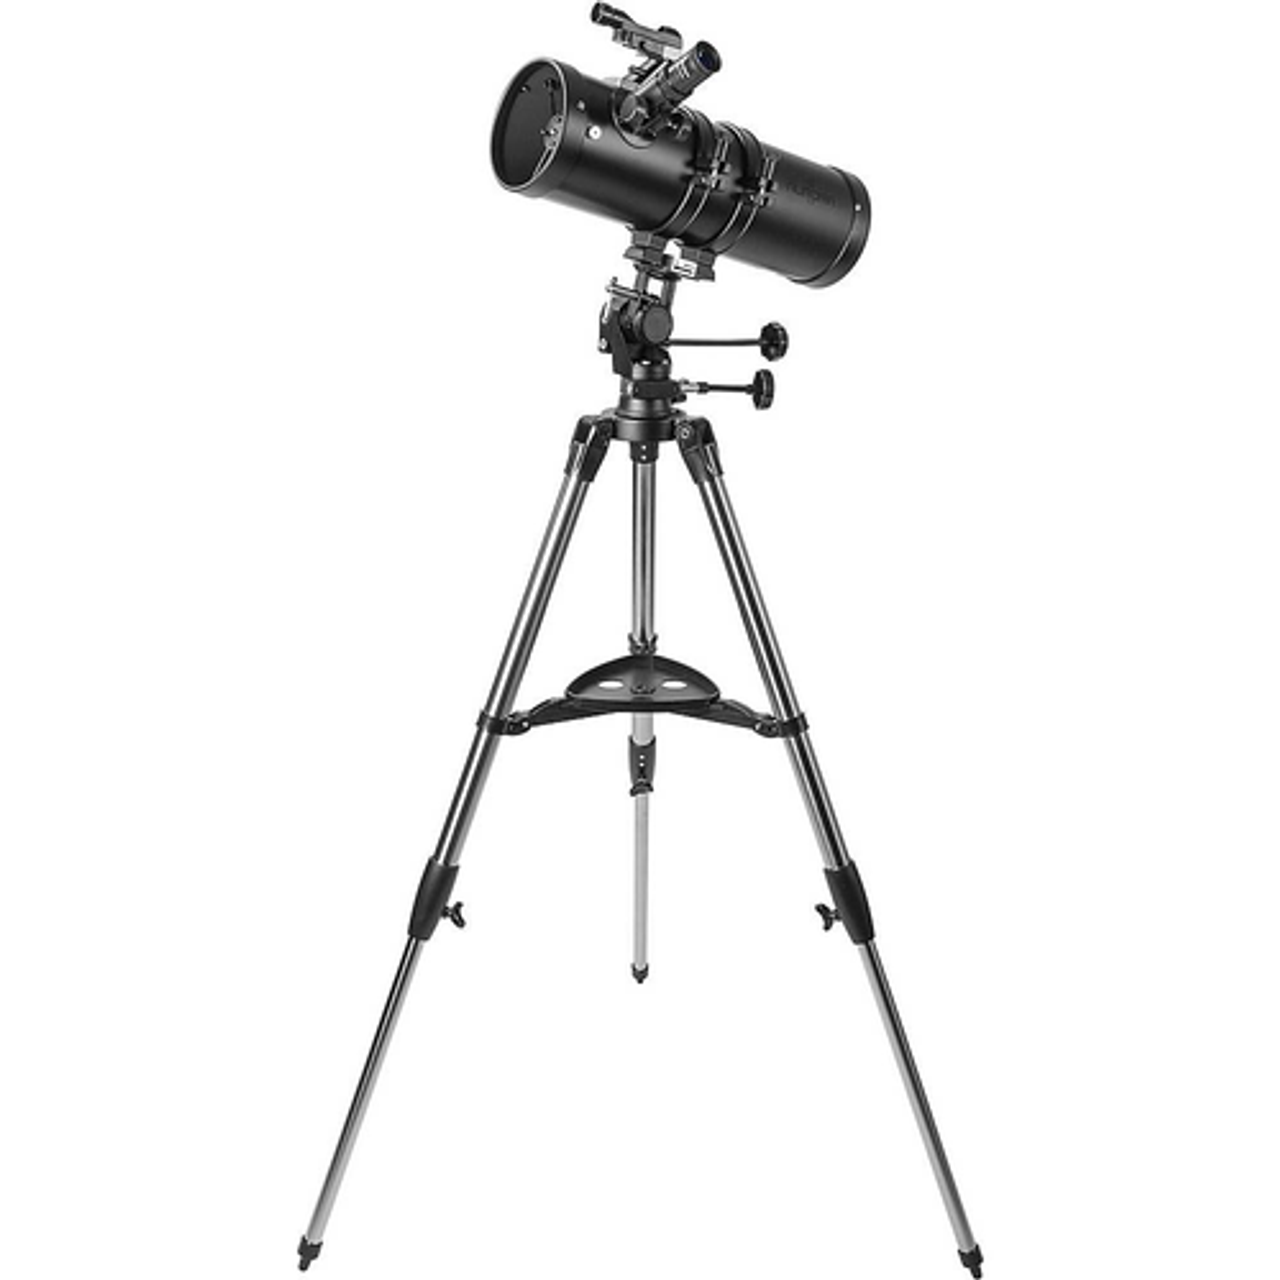 Explore One - Aurora II 114mm Reflector Telescope - Flat Black